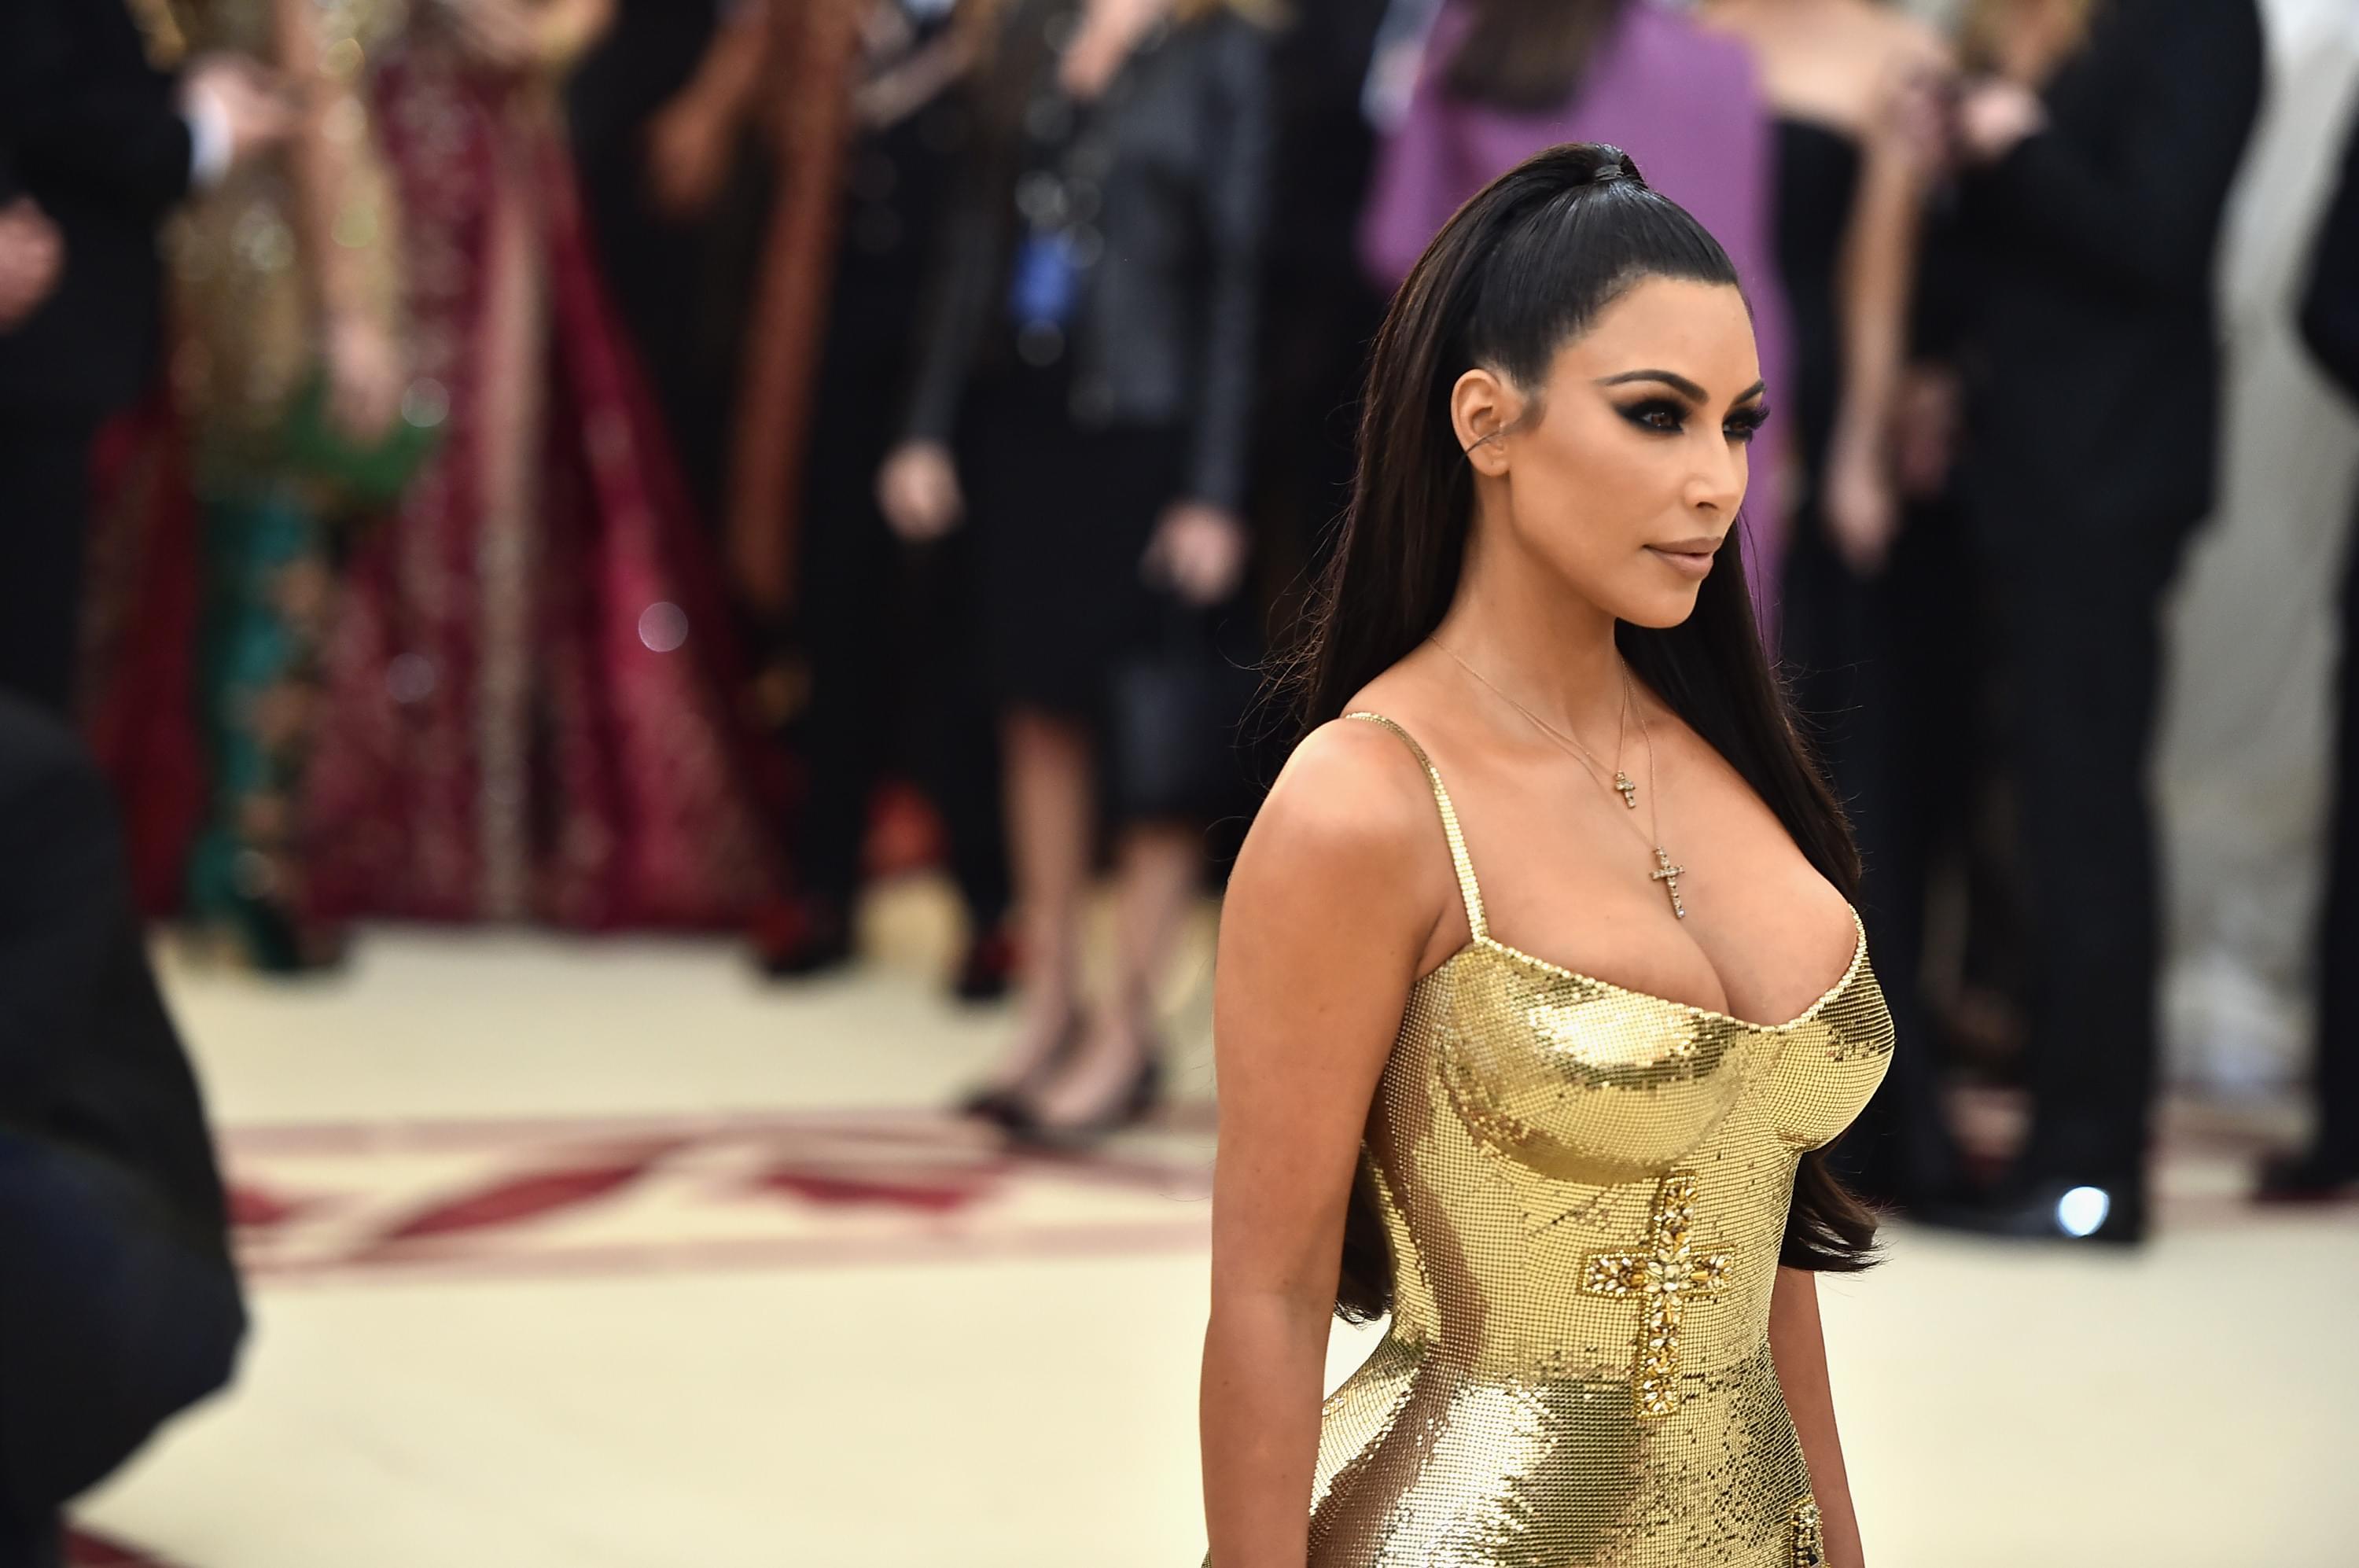 Kim Kardashian Heads To White House To Discuss Prison Reform With Donald Trump